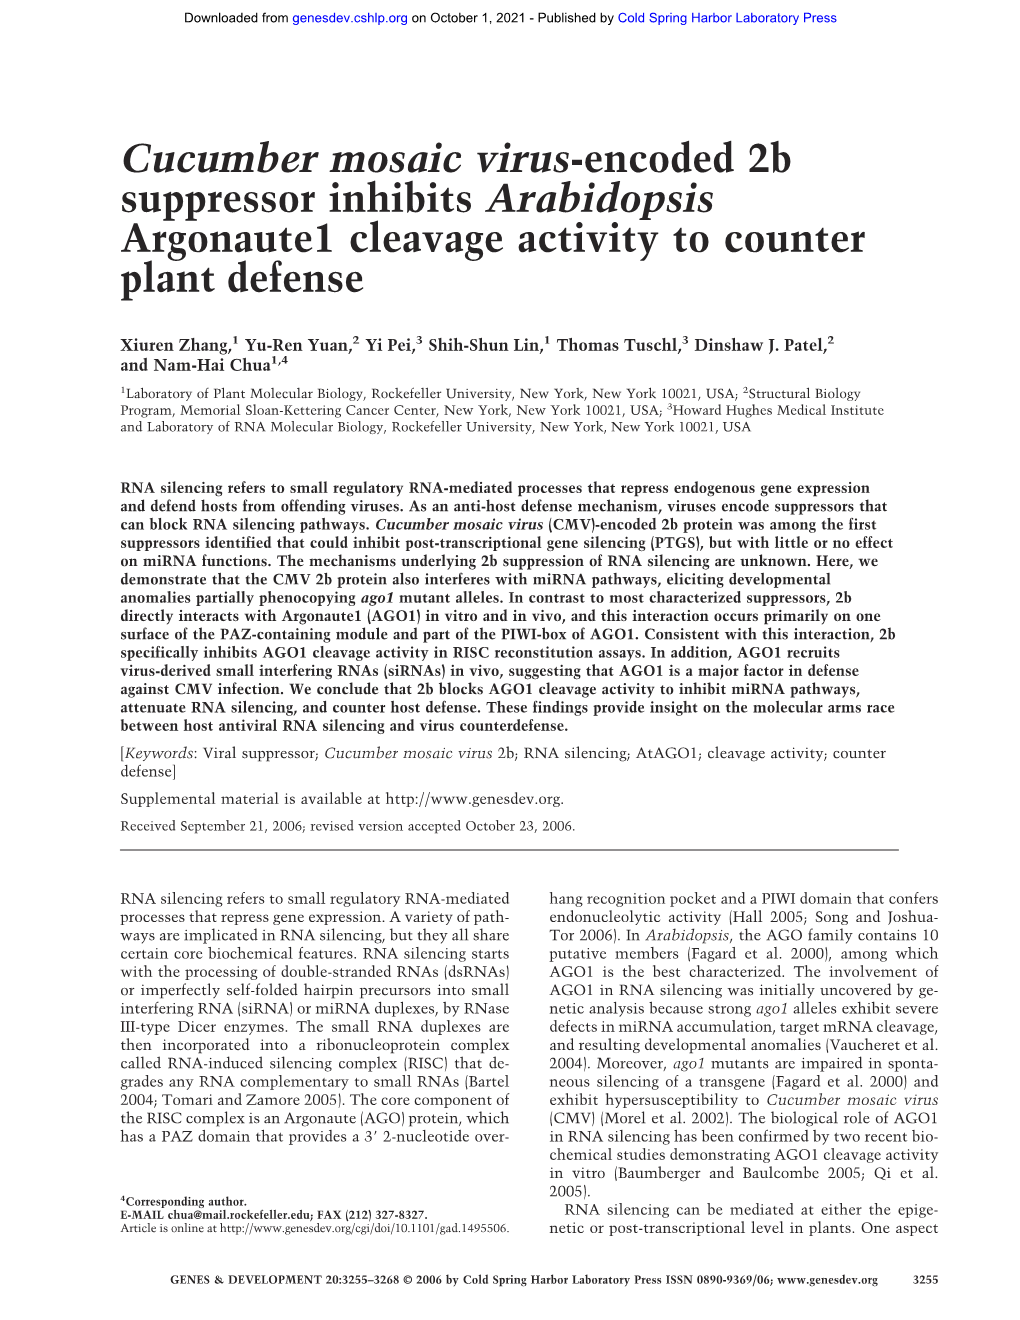 Cucumber Mosaic Virus-Encoded 2B Suppressor Inhibits Arabidopsis Argonaute1 Cleavage Activity to Counter Plant Defense